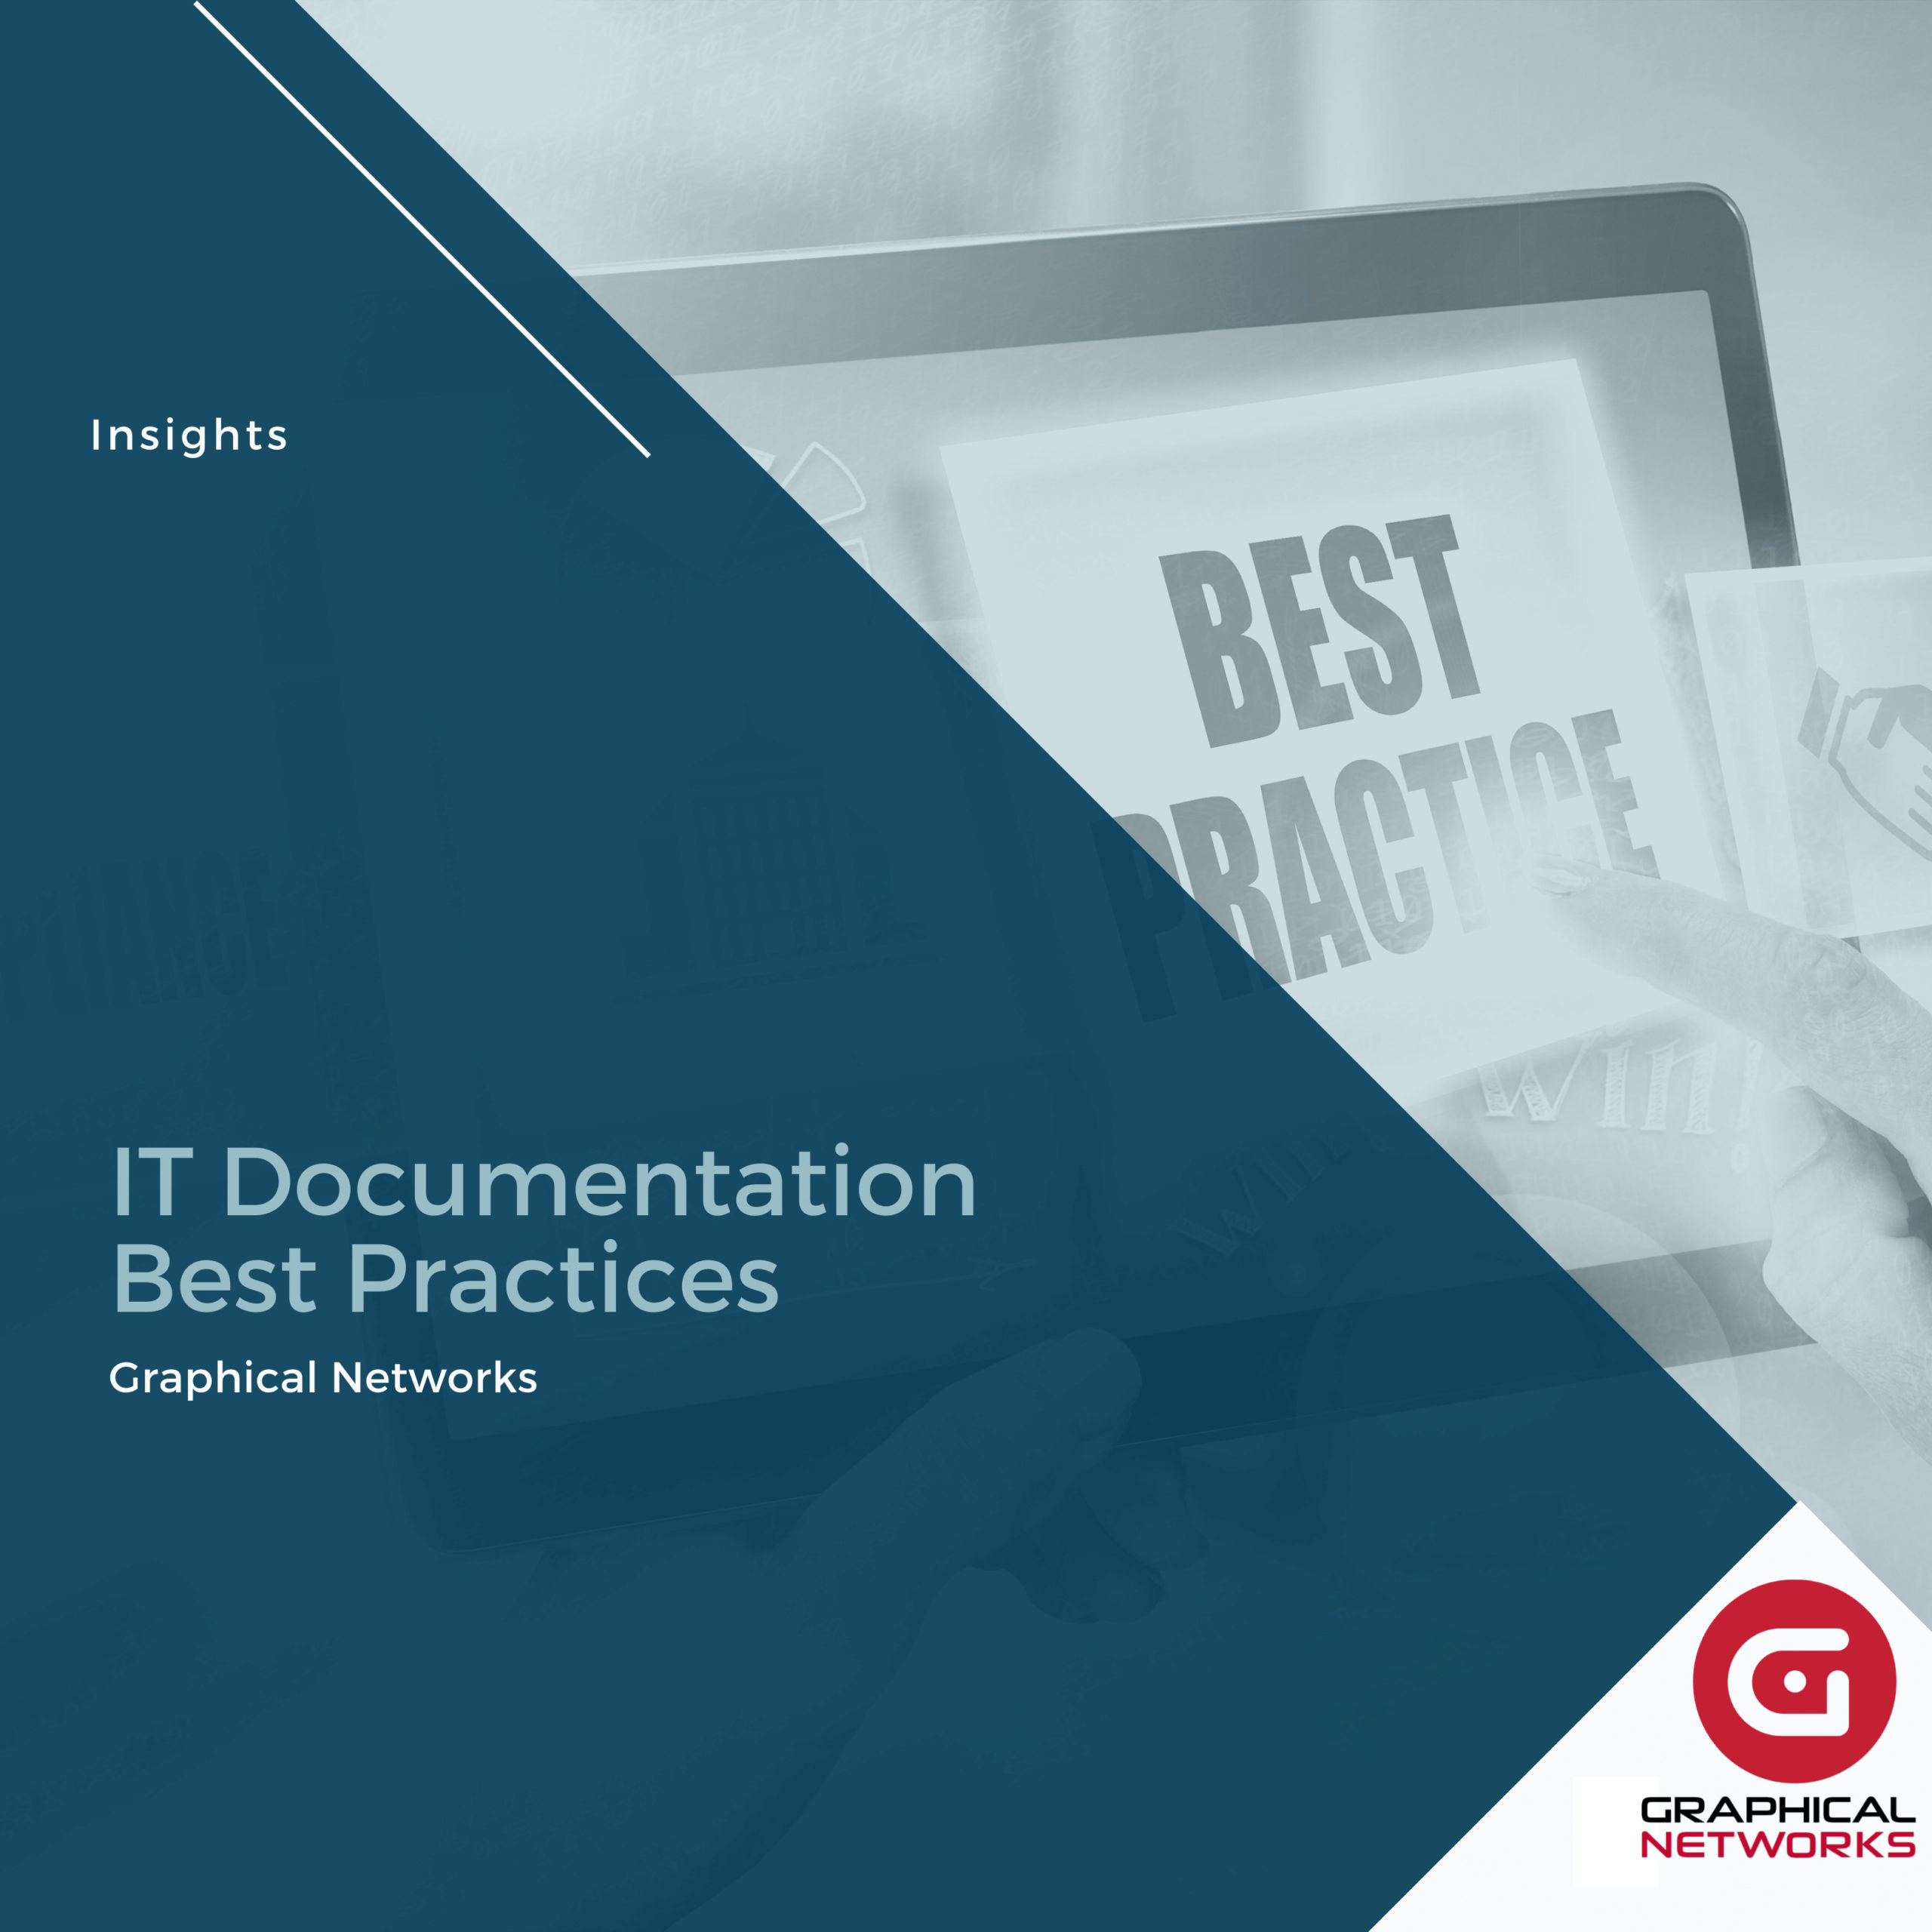 IT Documentation Best Practices